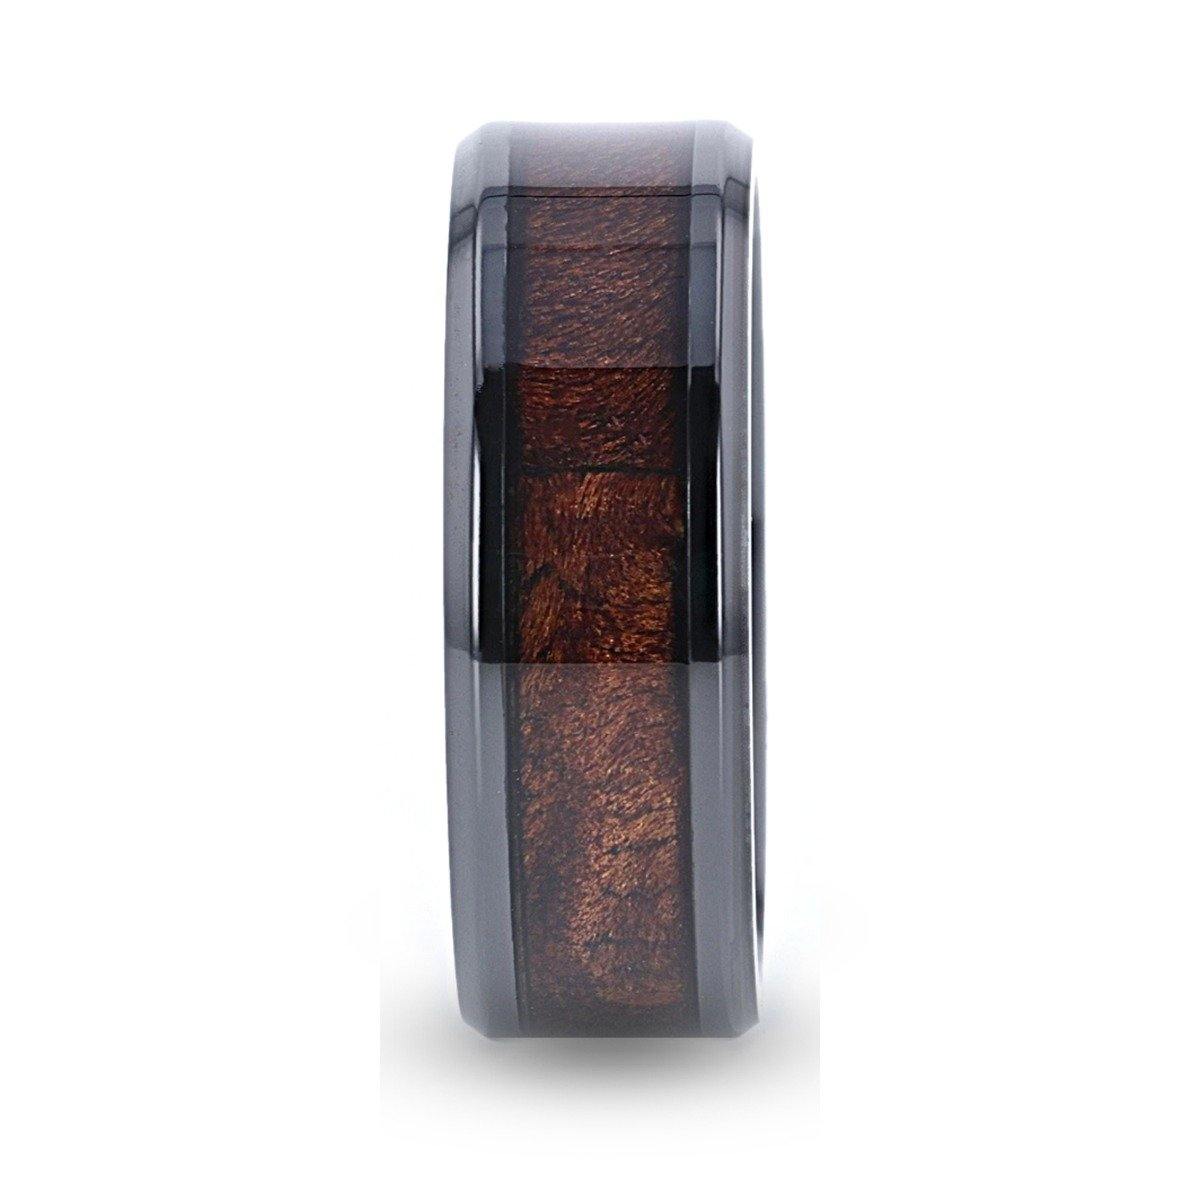 CERISE - Redwood Inlaid Black Ceramic Ring with Beveled Edges - 8mm - The Rutile Ltd